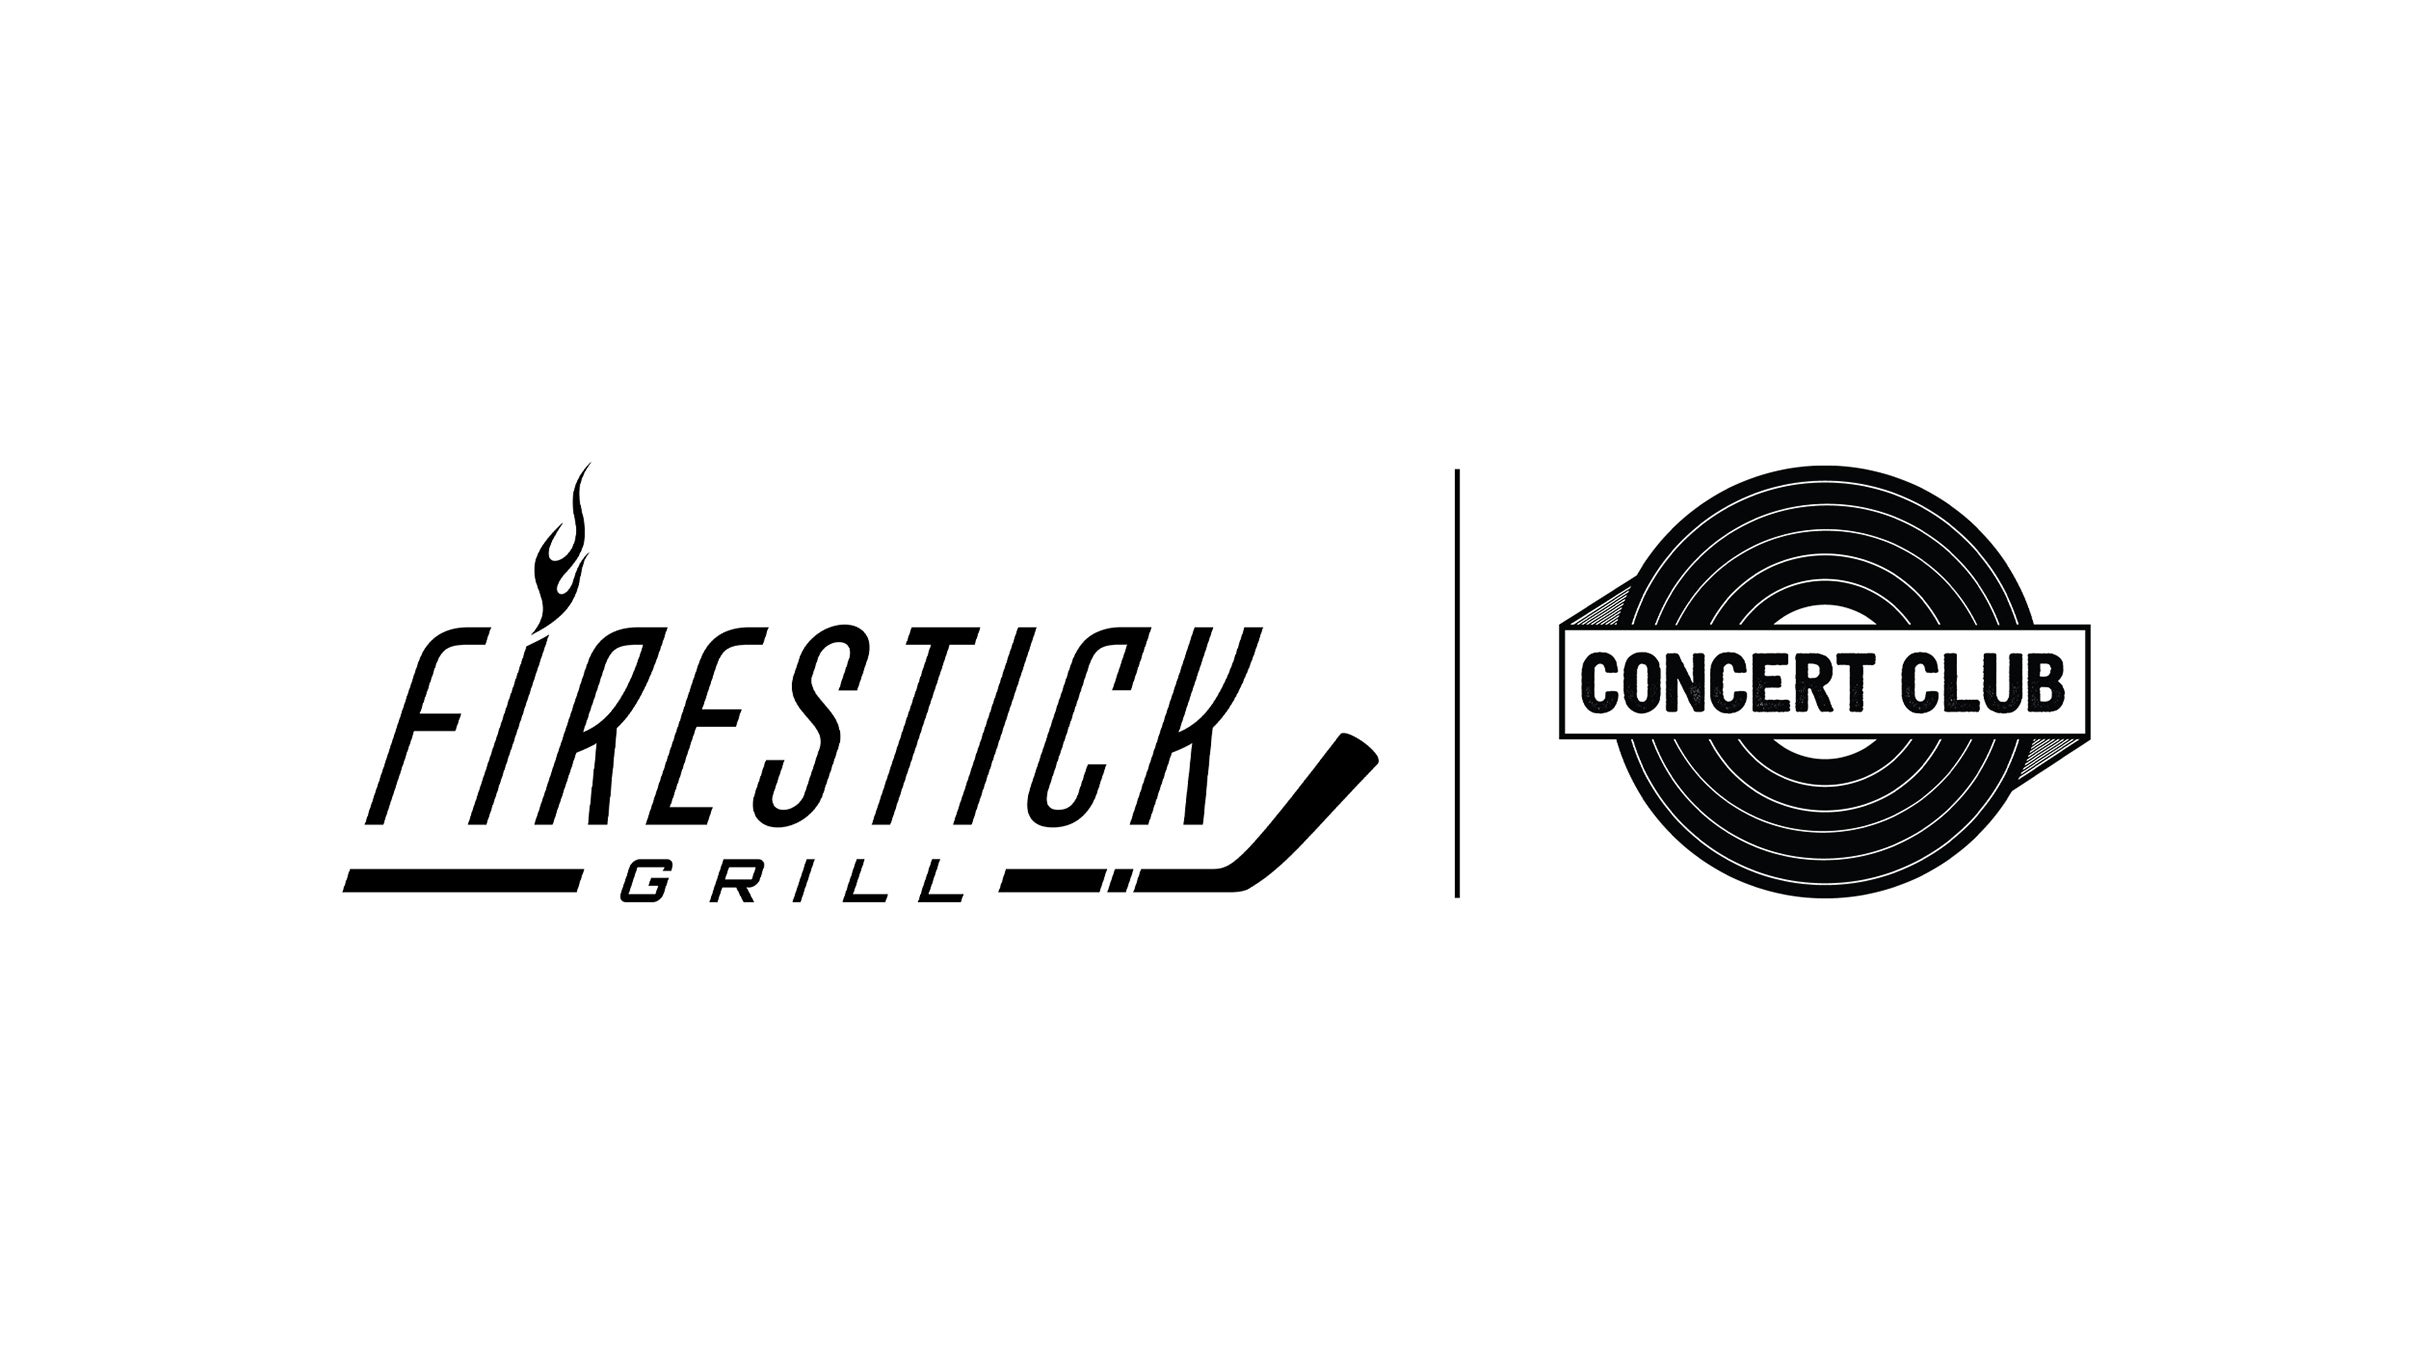 Concert Club in Firestick Grill presale information on freepresalepasswords.com